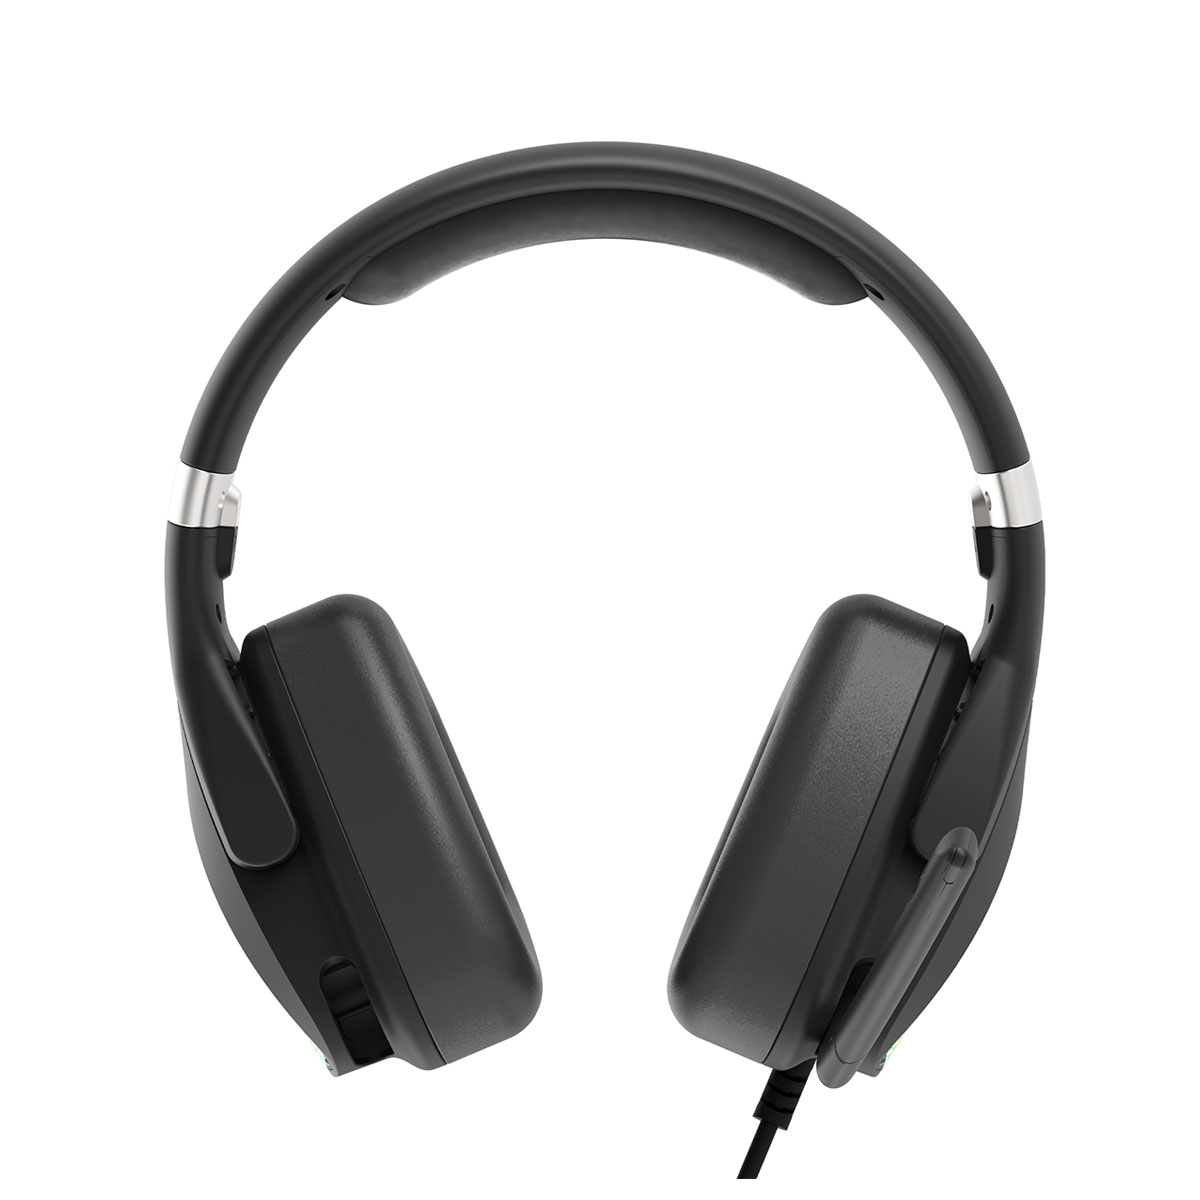 hg9068-headset-03